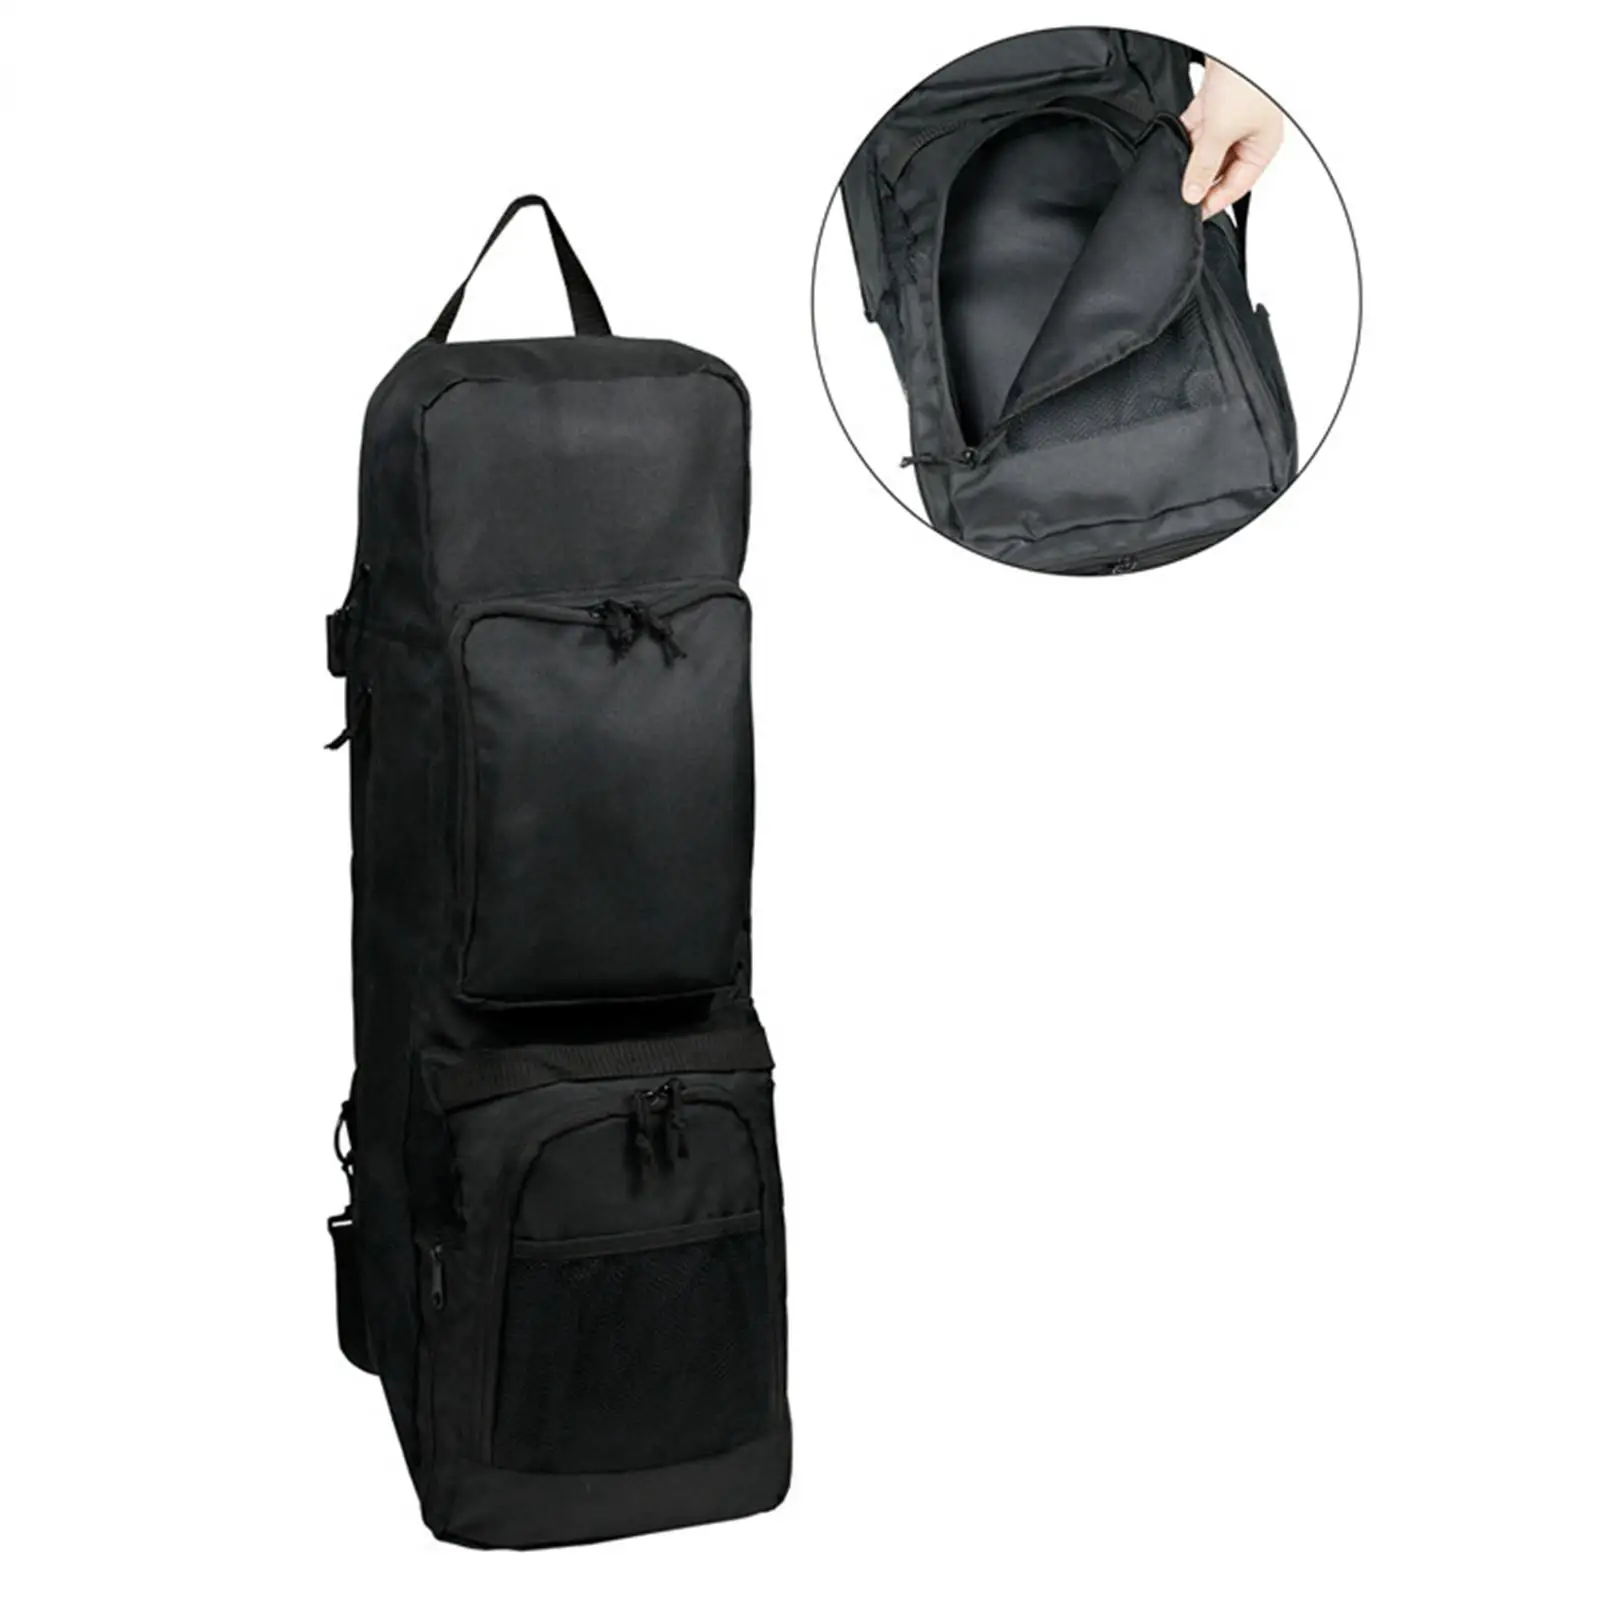 Yoga Carry Bag Travel Bag with Dual Handle Storage Bag Multifunction Gym Duffle Bag Yoga Mat Bag for Sports Workout Home Office